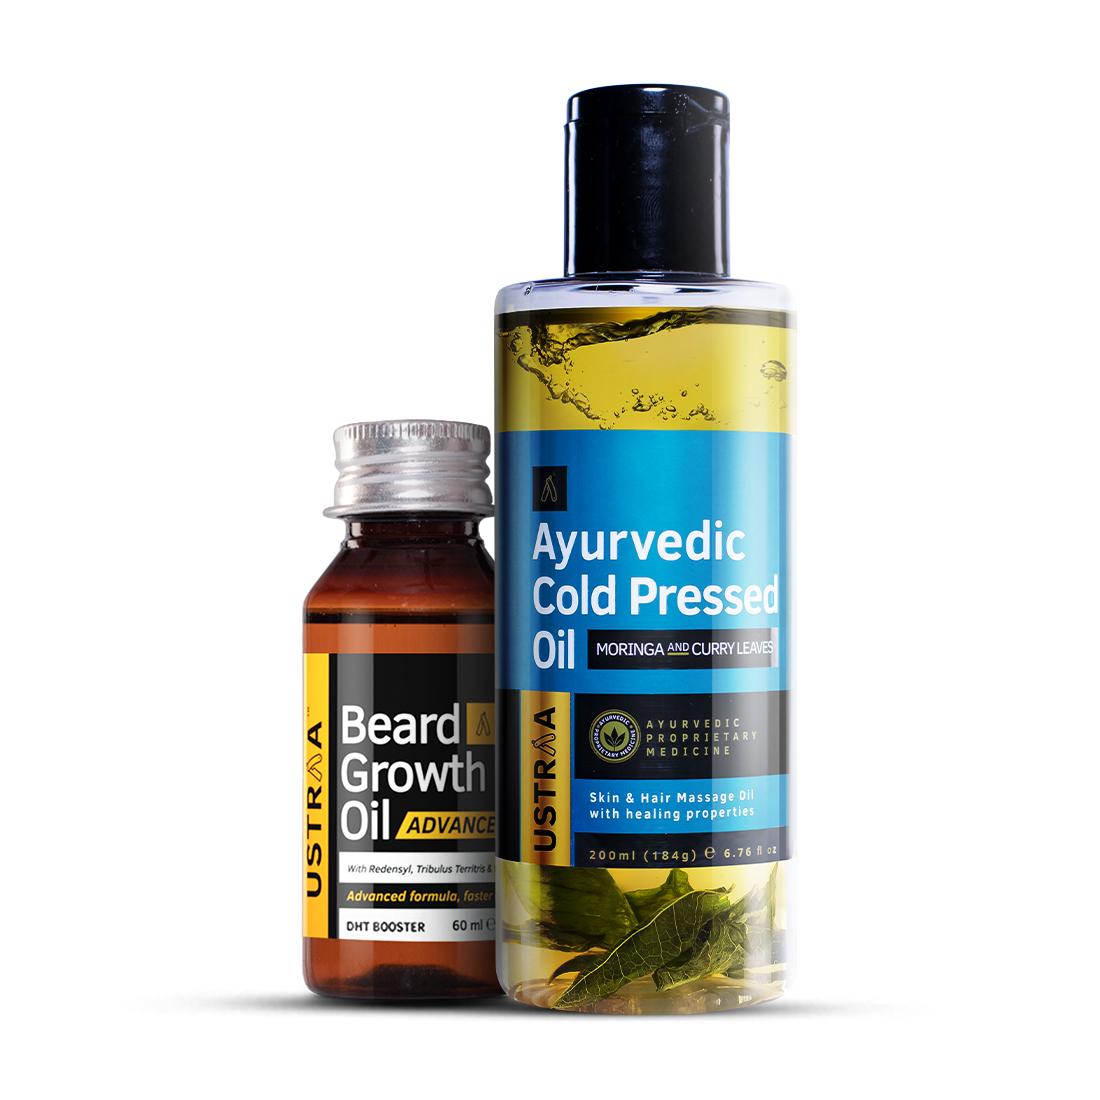 Ayurvedic Cold Pressed Oil & Beard Growth Oil Advanced Combo